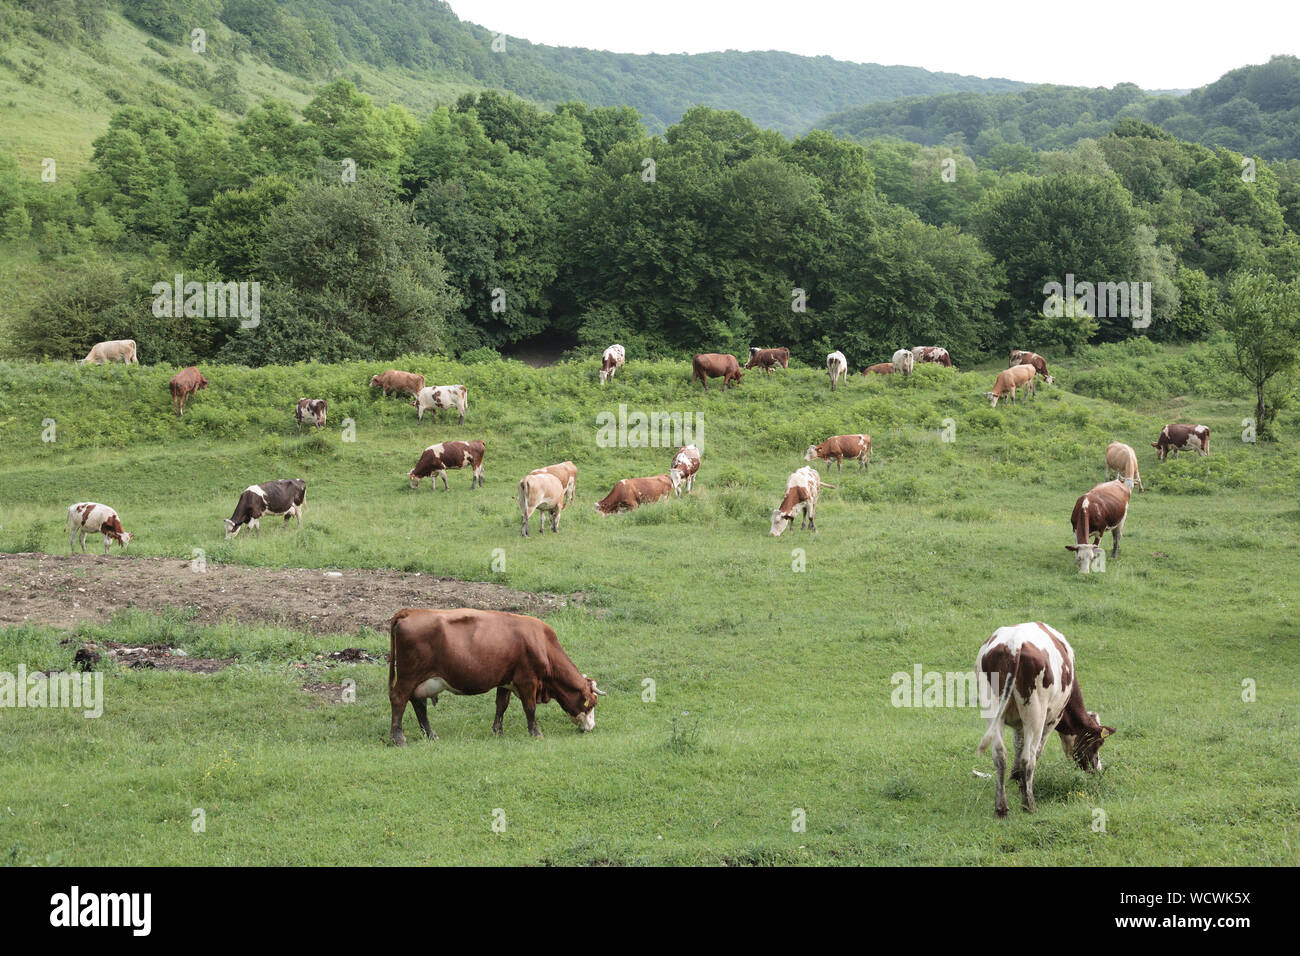 Mixed brown and white coloured cattle grazing on open grass pasture outside the village of Bunesti, Transylvania, Romania Stock Photo